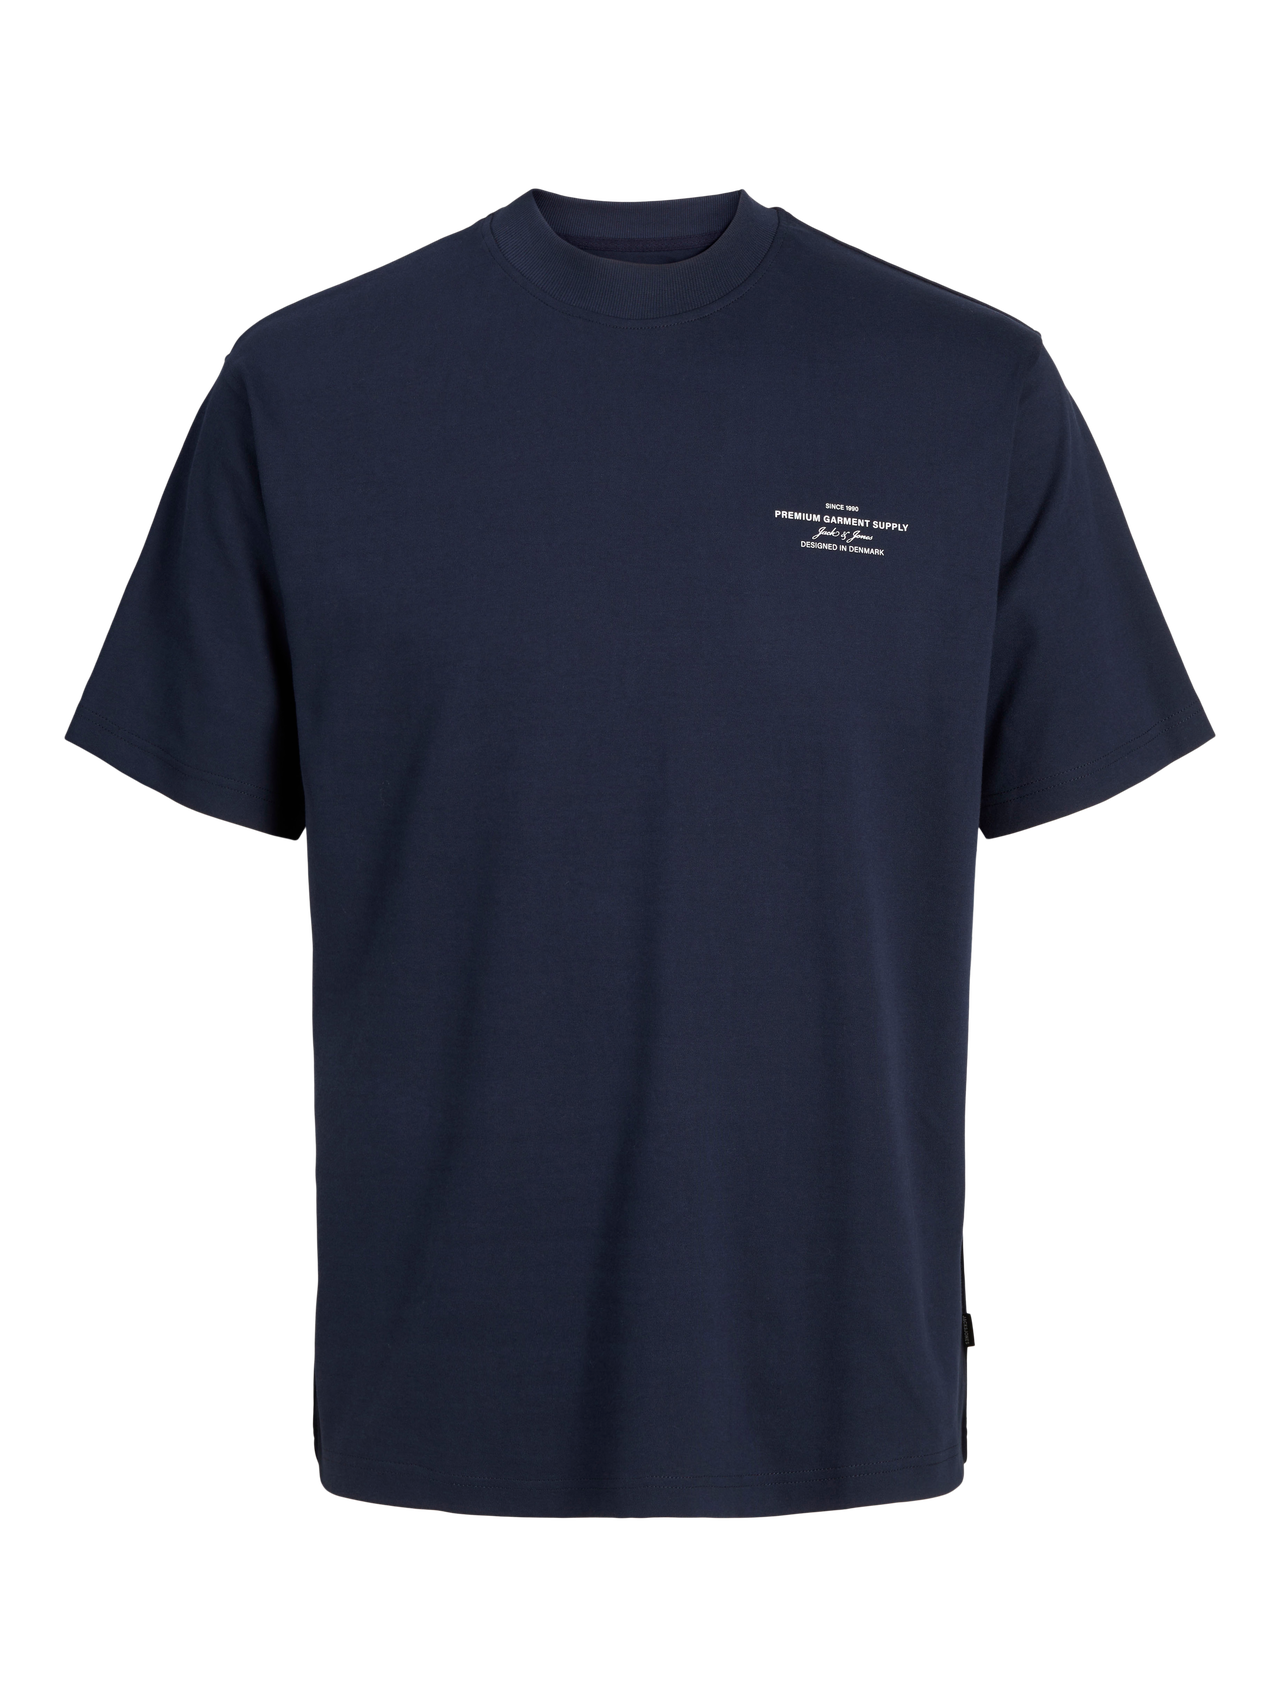 Jack & Jones Gedruckt Rundhals T-shirt -Night Sky - 12259357